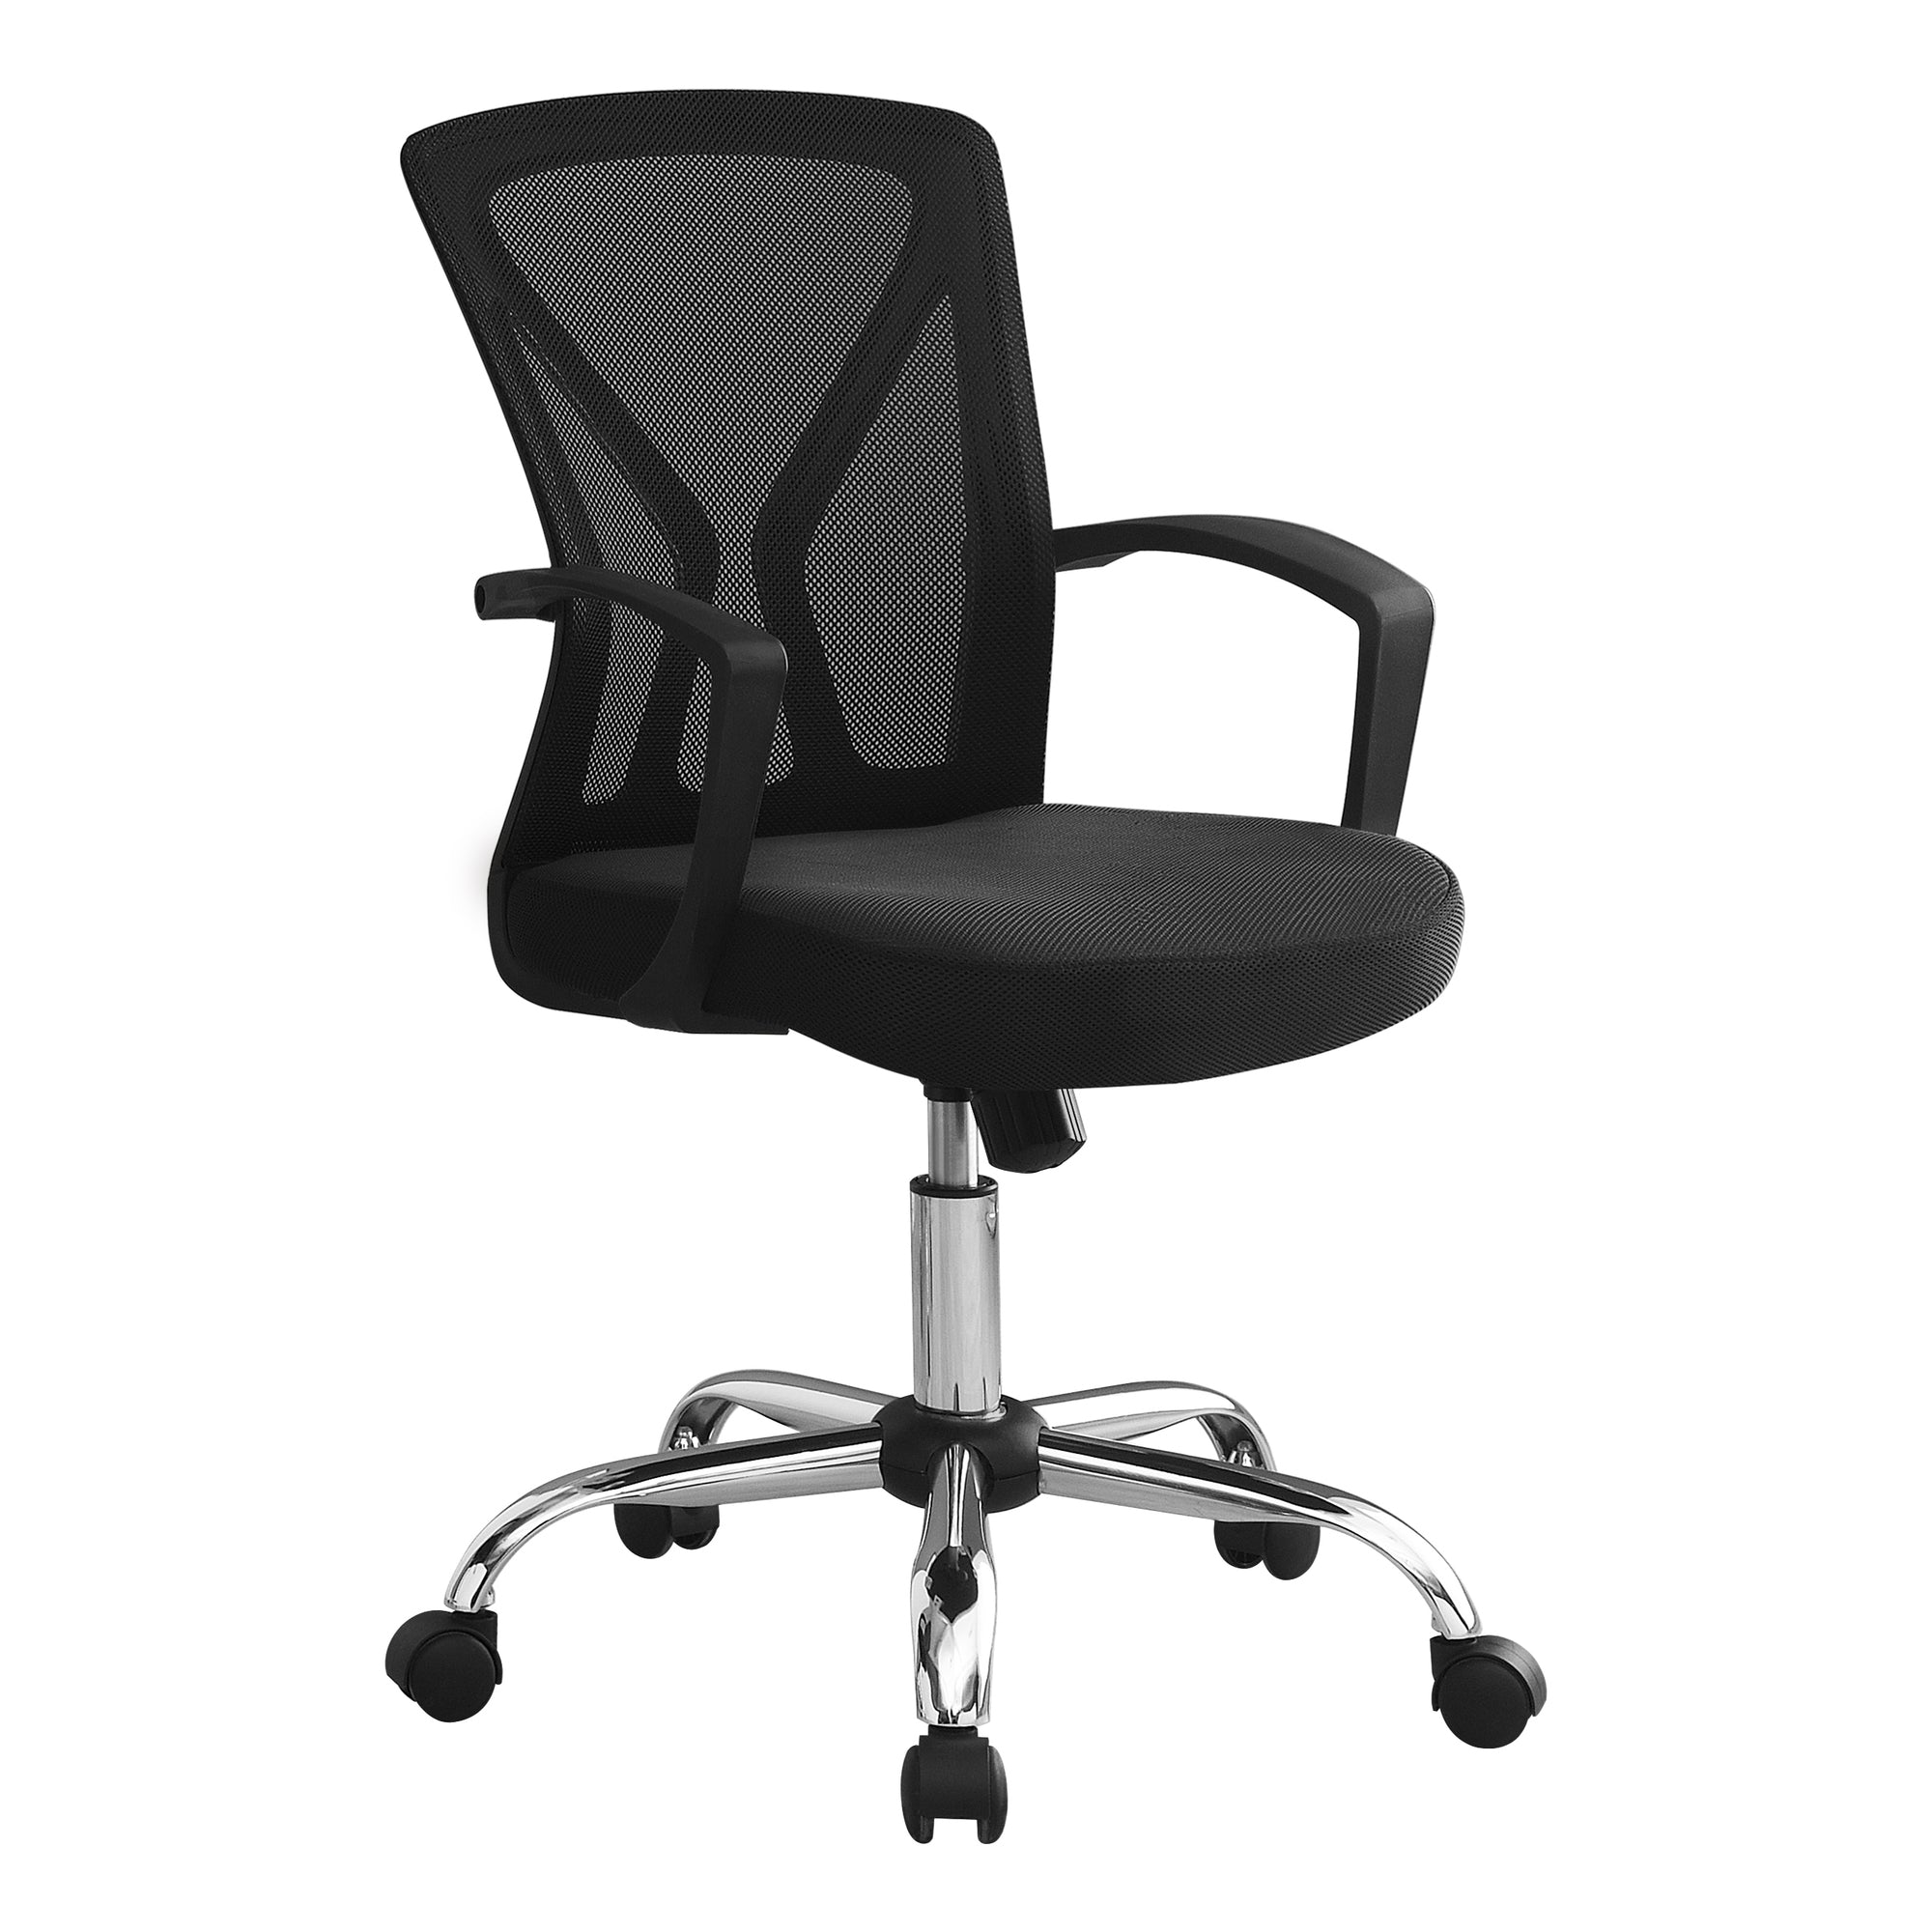 MN-217460    Office Chair, Adjustable Height, Swivel, Ergonomic, Armrests, Computer Desk, Office, Metal, Laminate, Black, Contemporary, Modern